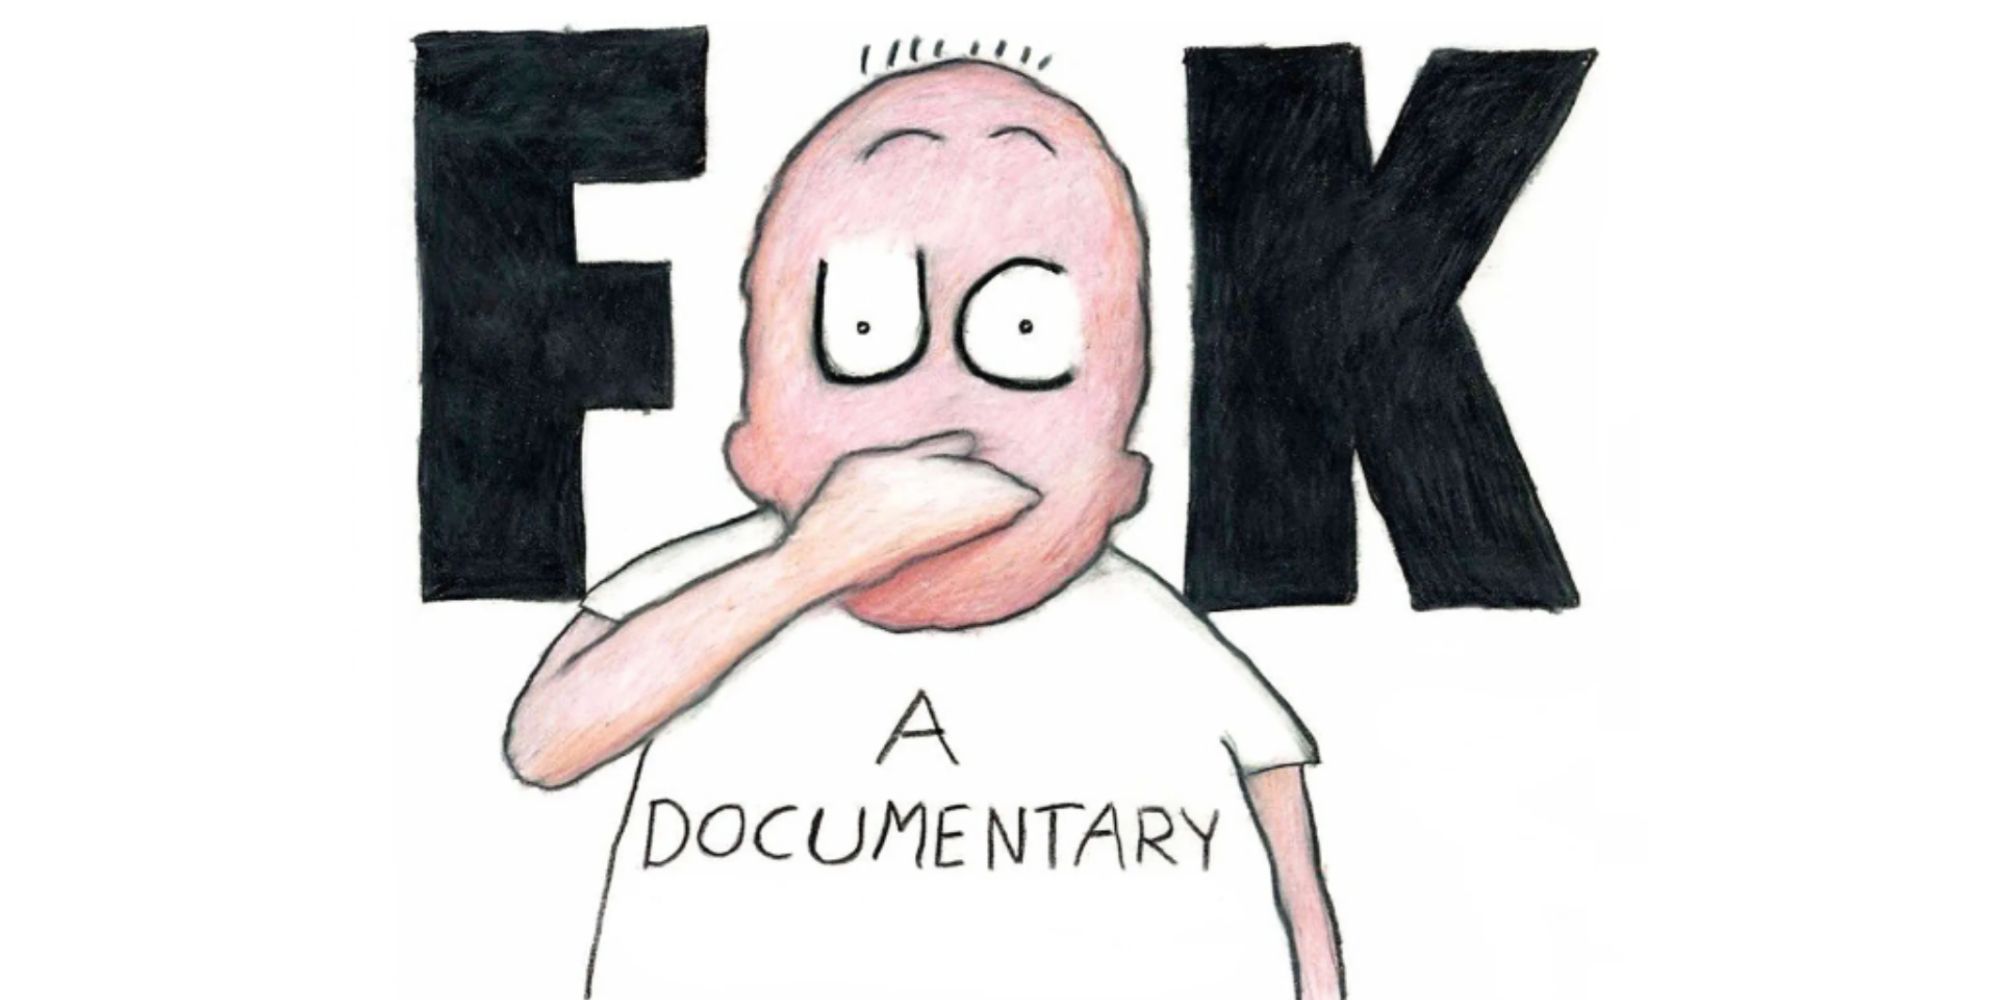 F__k (2005) documentary